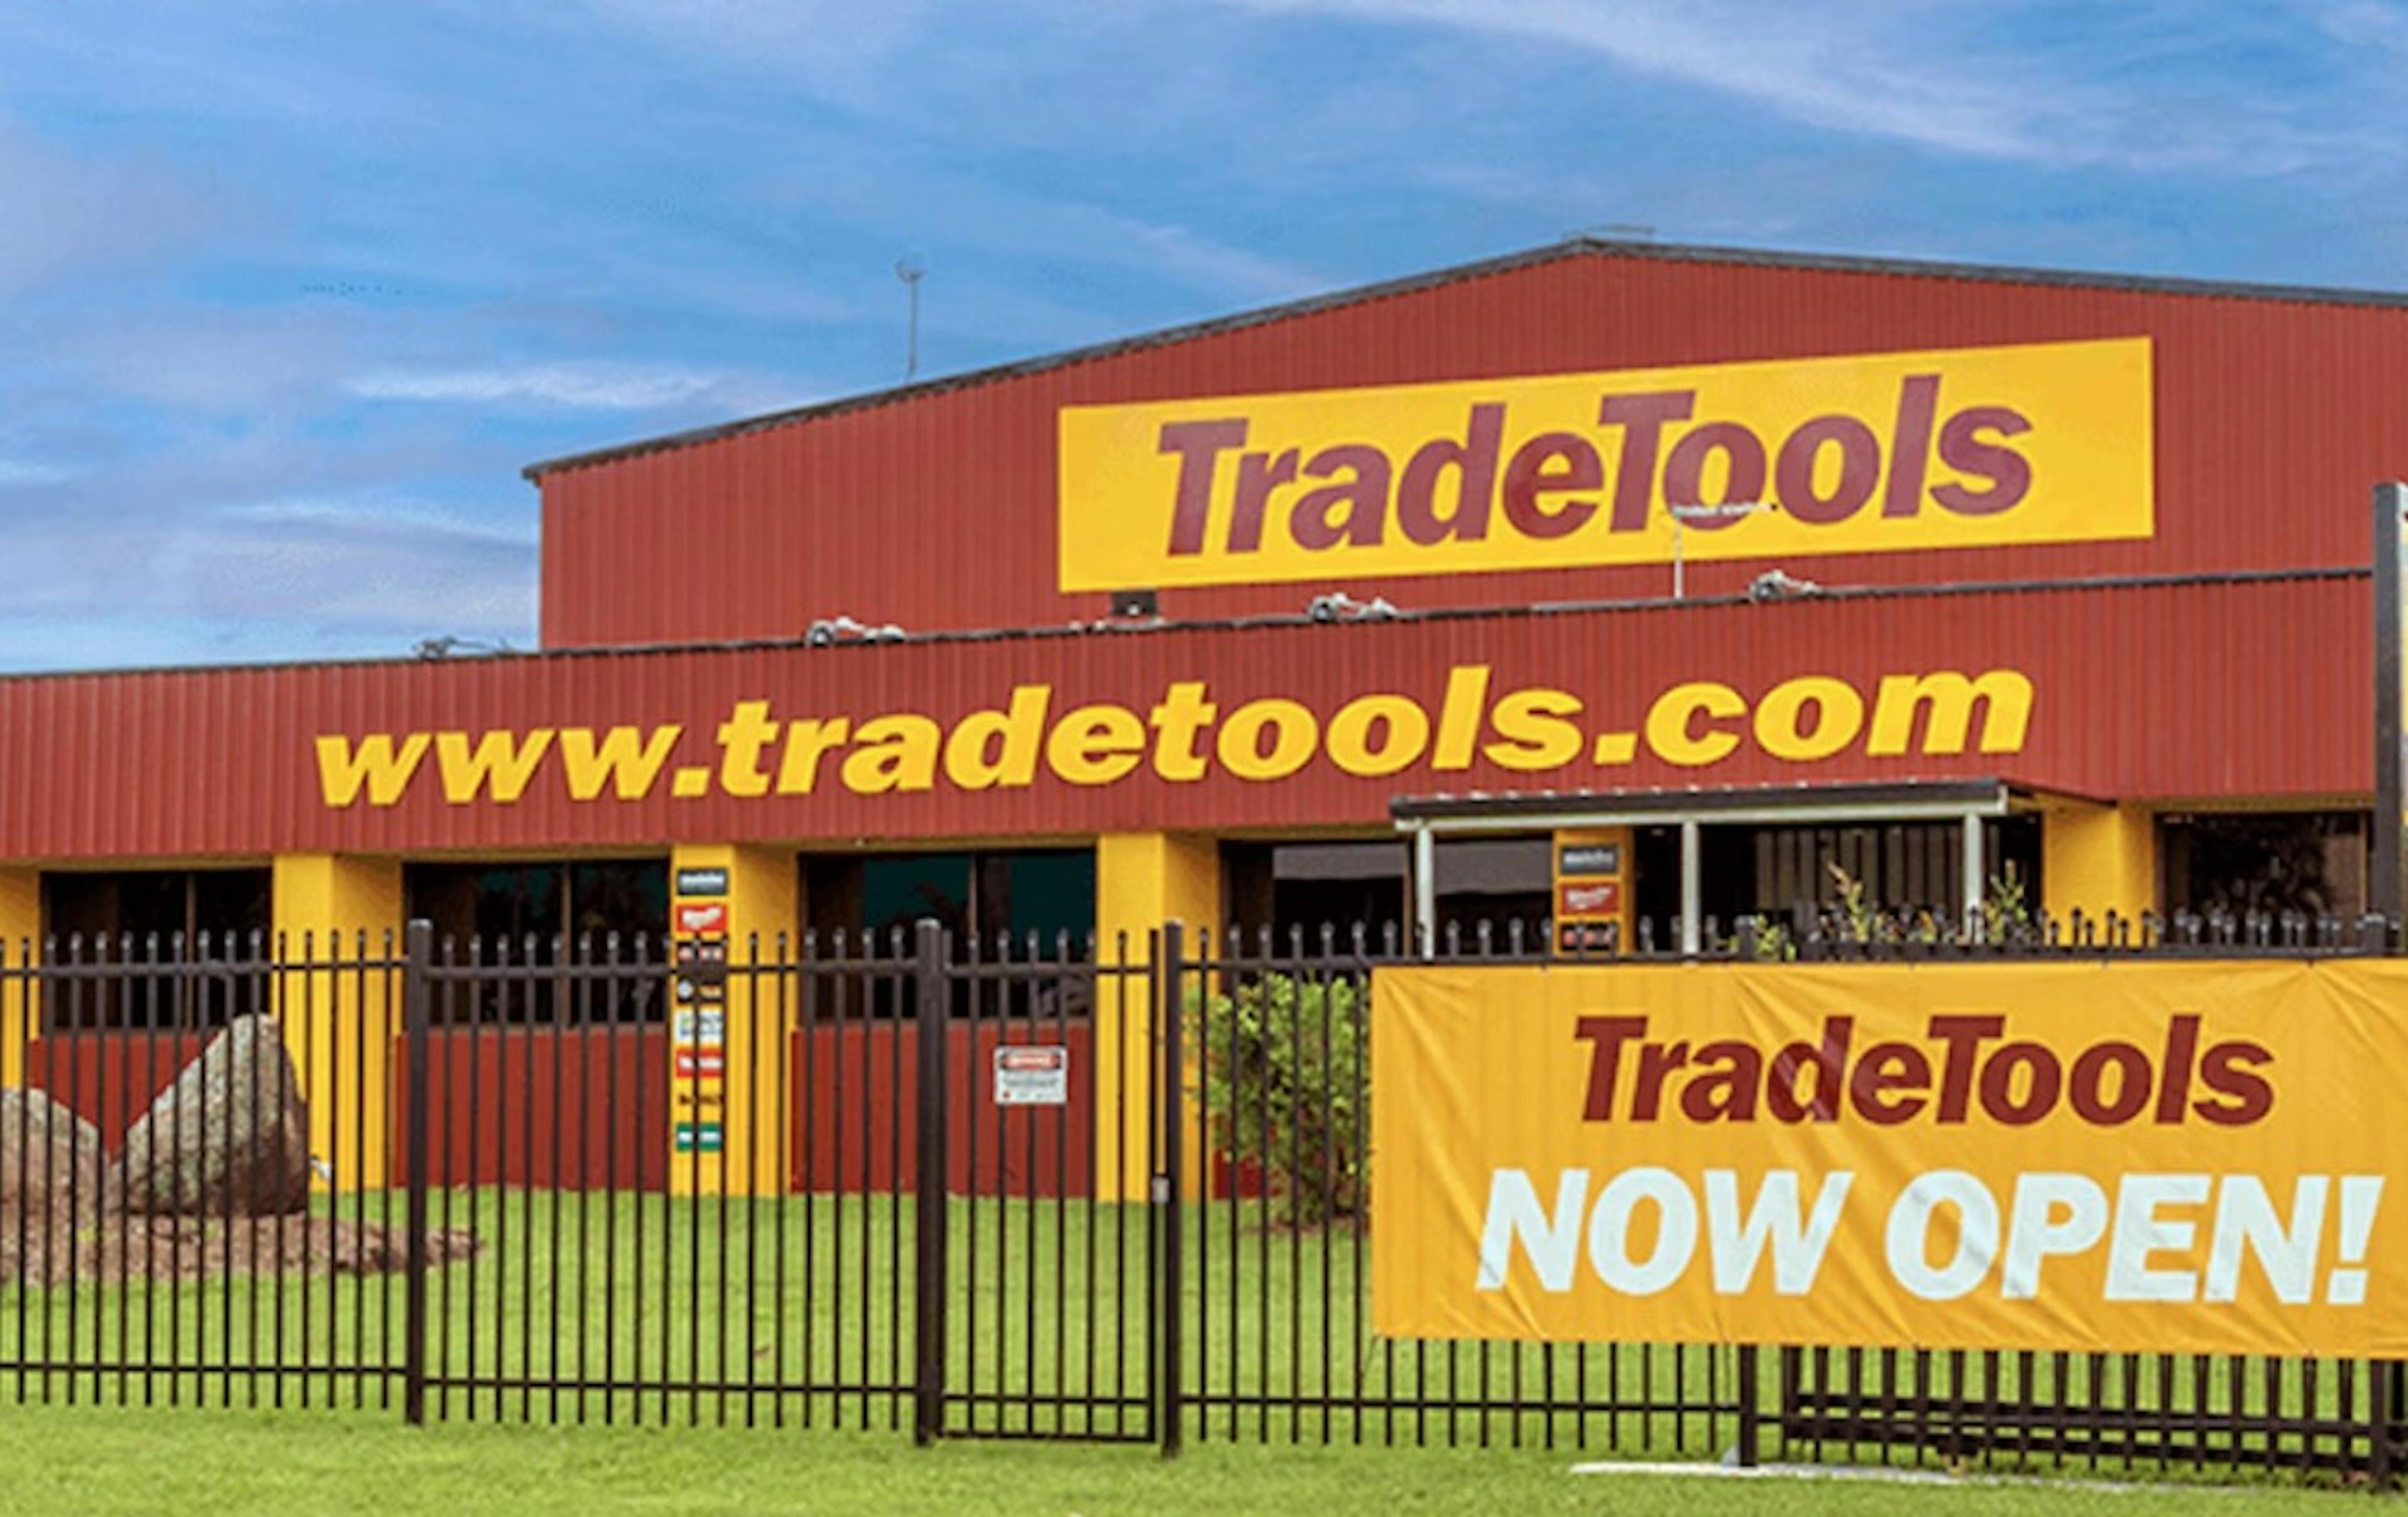 tradetools.com Now Open